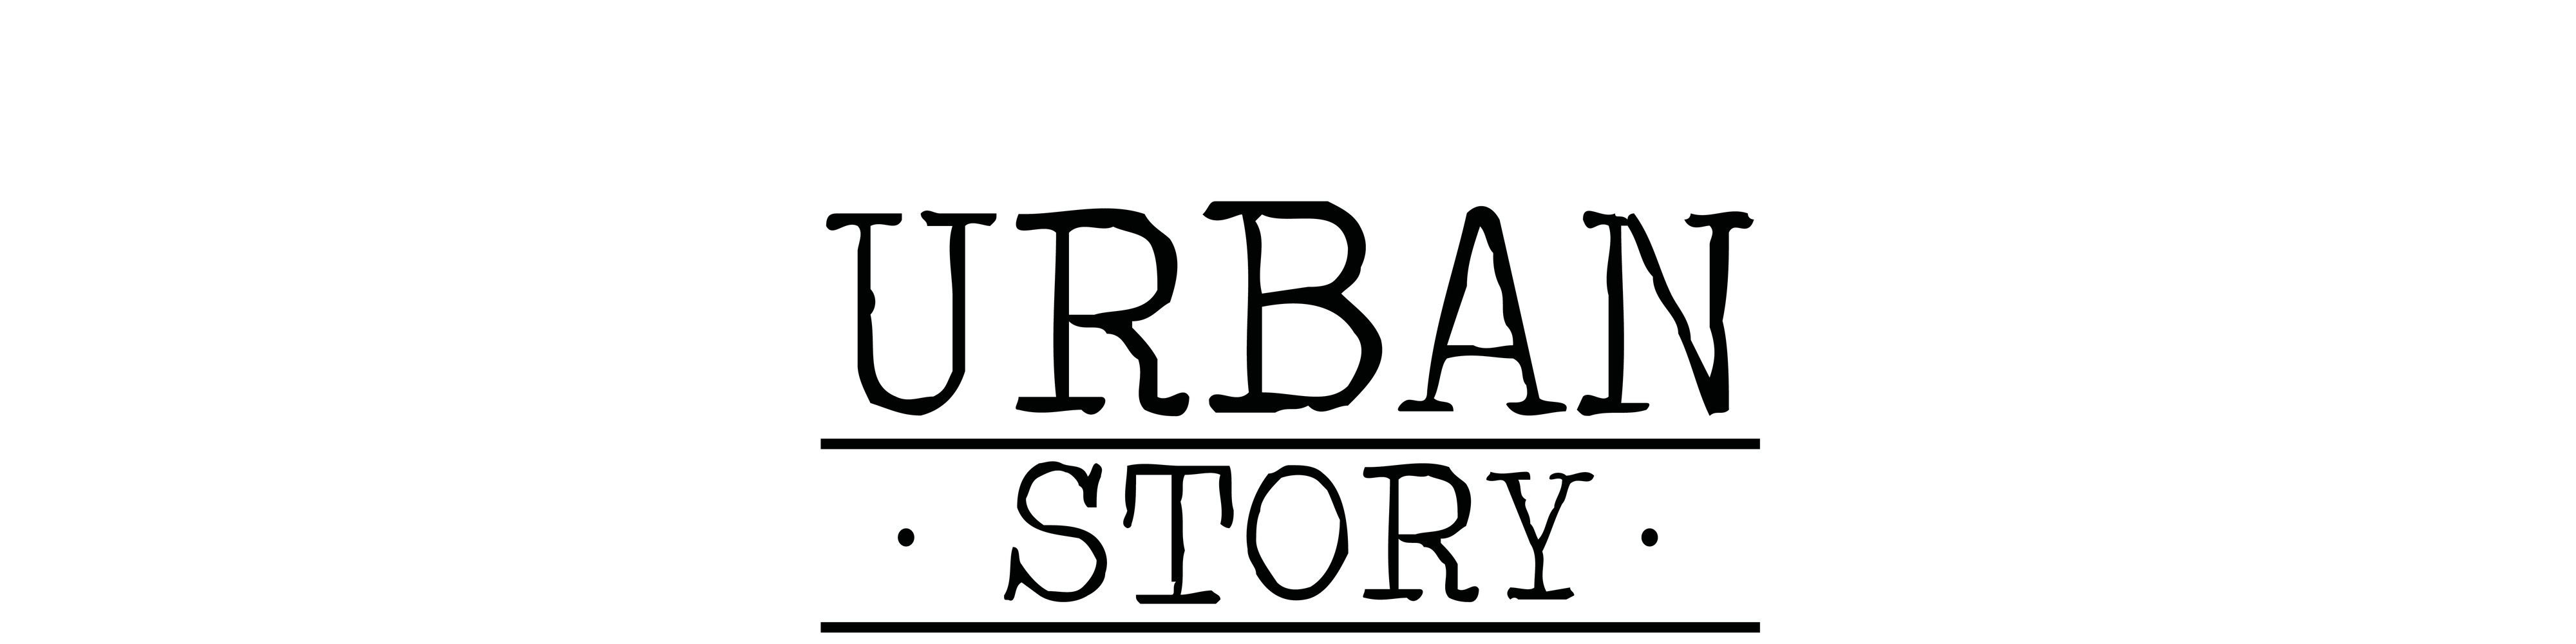 URBAN STORY